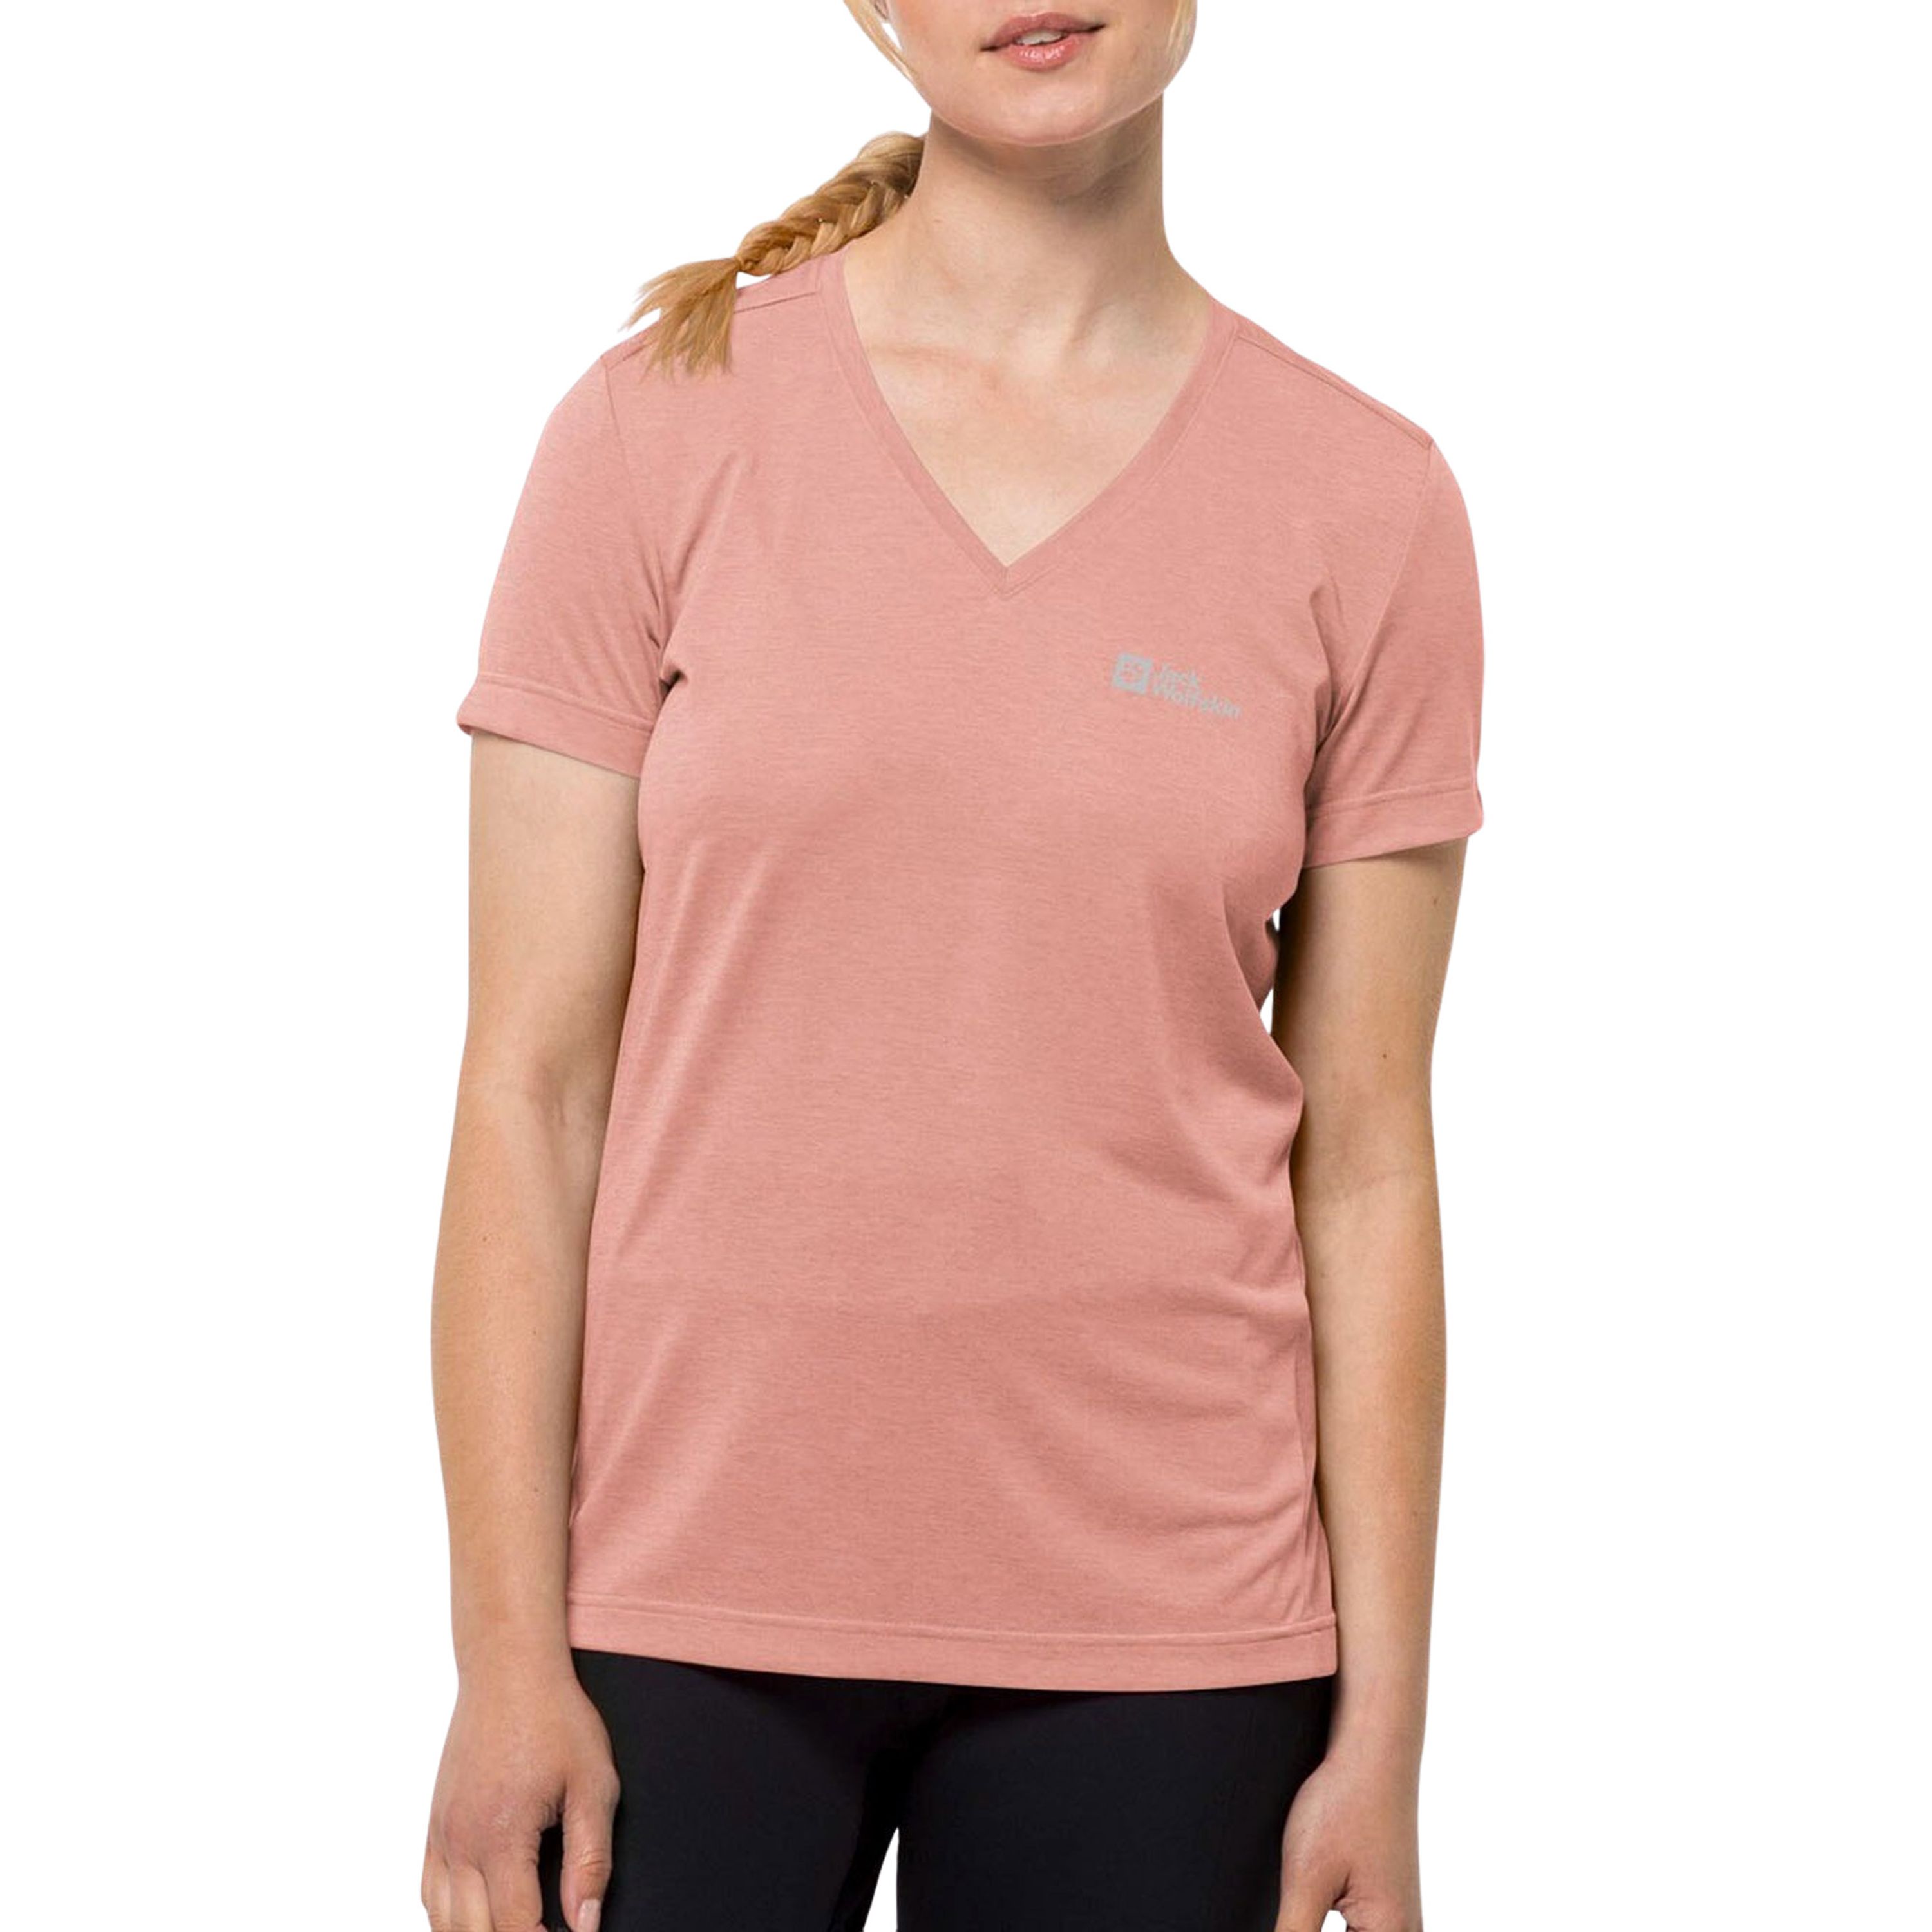 Jack Wolfskin Crosstrail T-Shirt Women Functioneel shirt Dames XXL bruin rose dawn